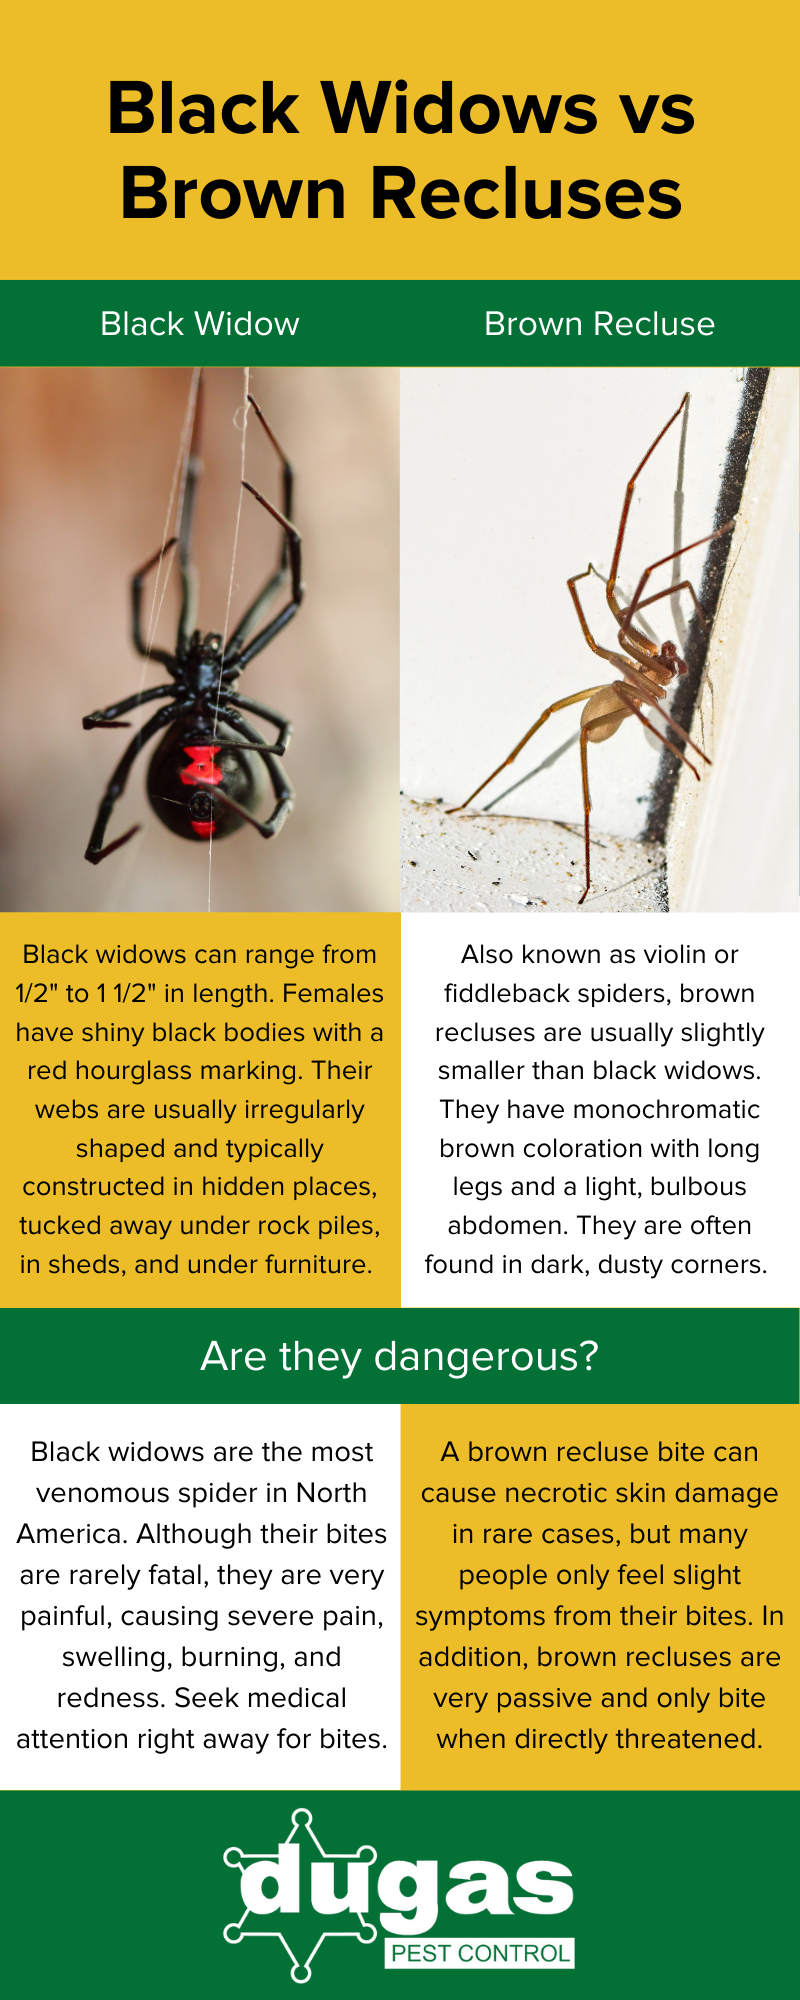 Black Widow vs Brown Recluse Infographic - Dugas Pest Control in Baton Rouge LA 